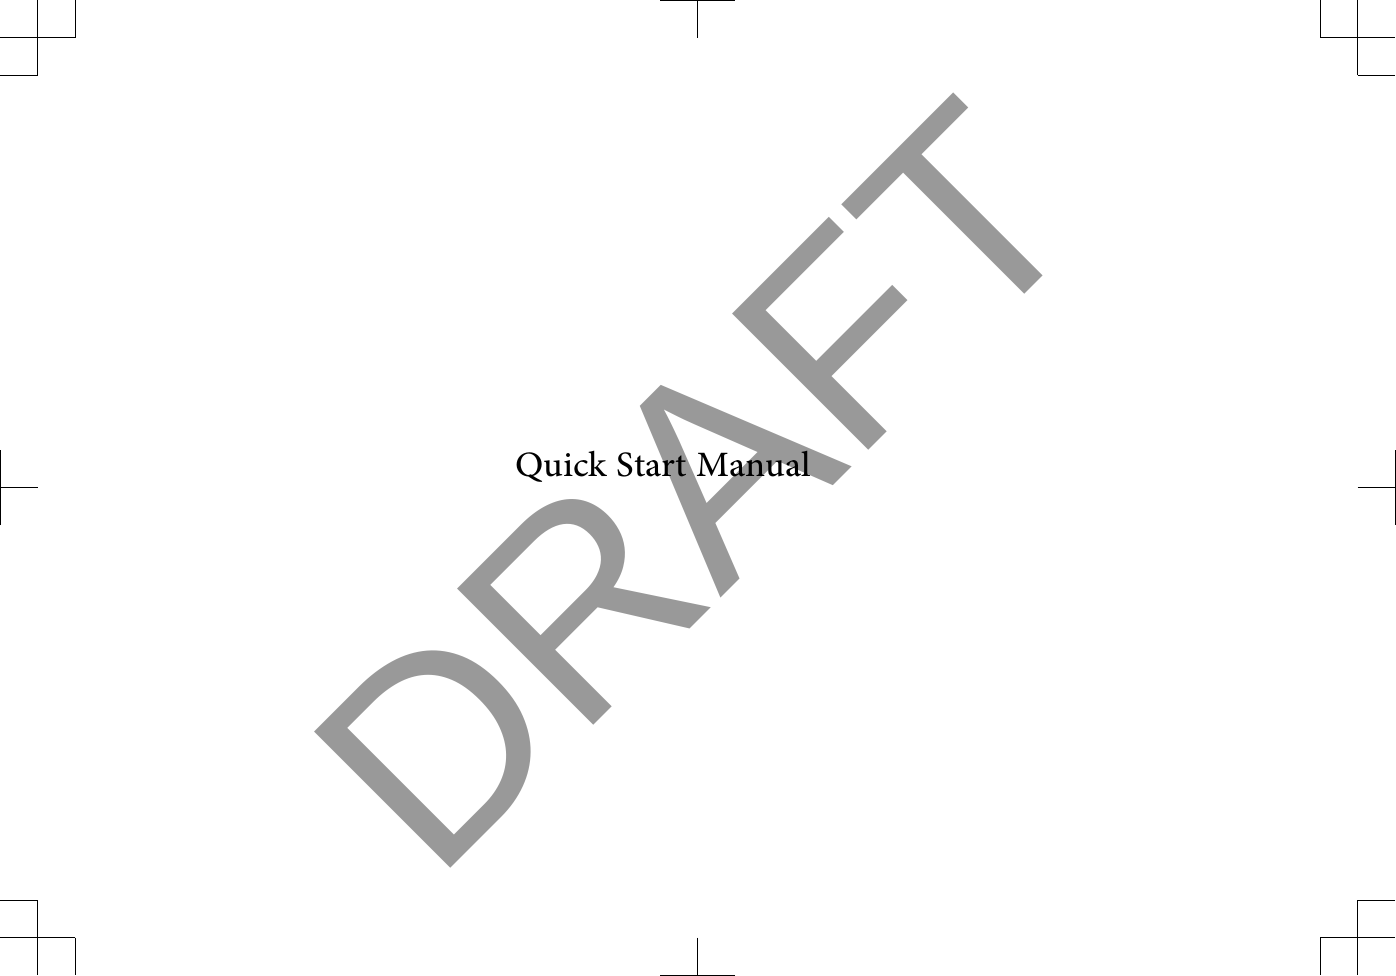 DRAFTQuick Start Manual